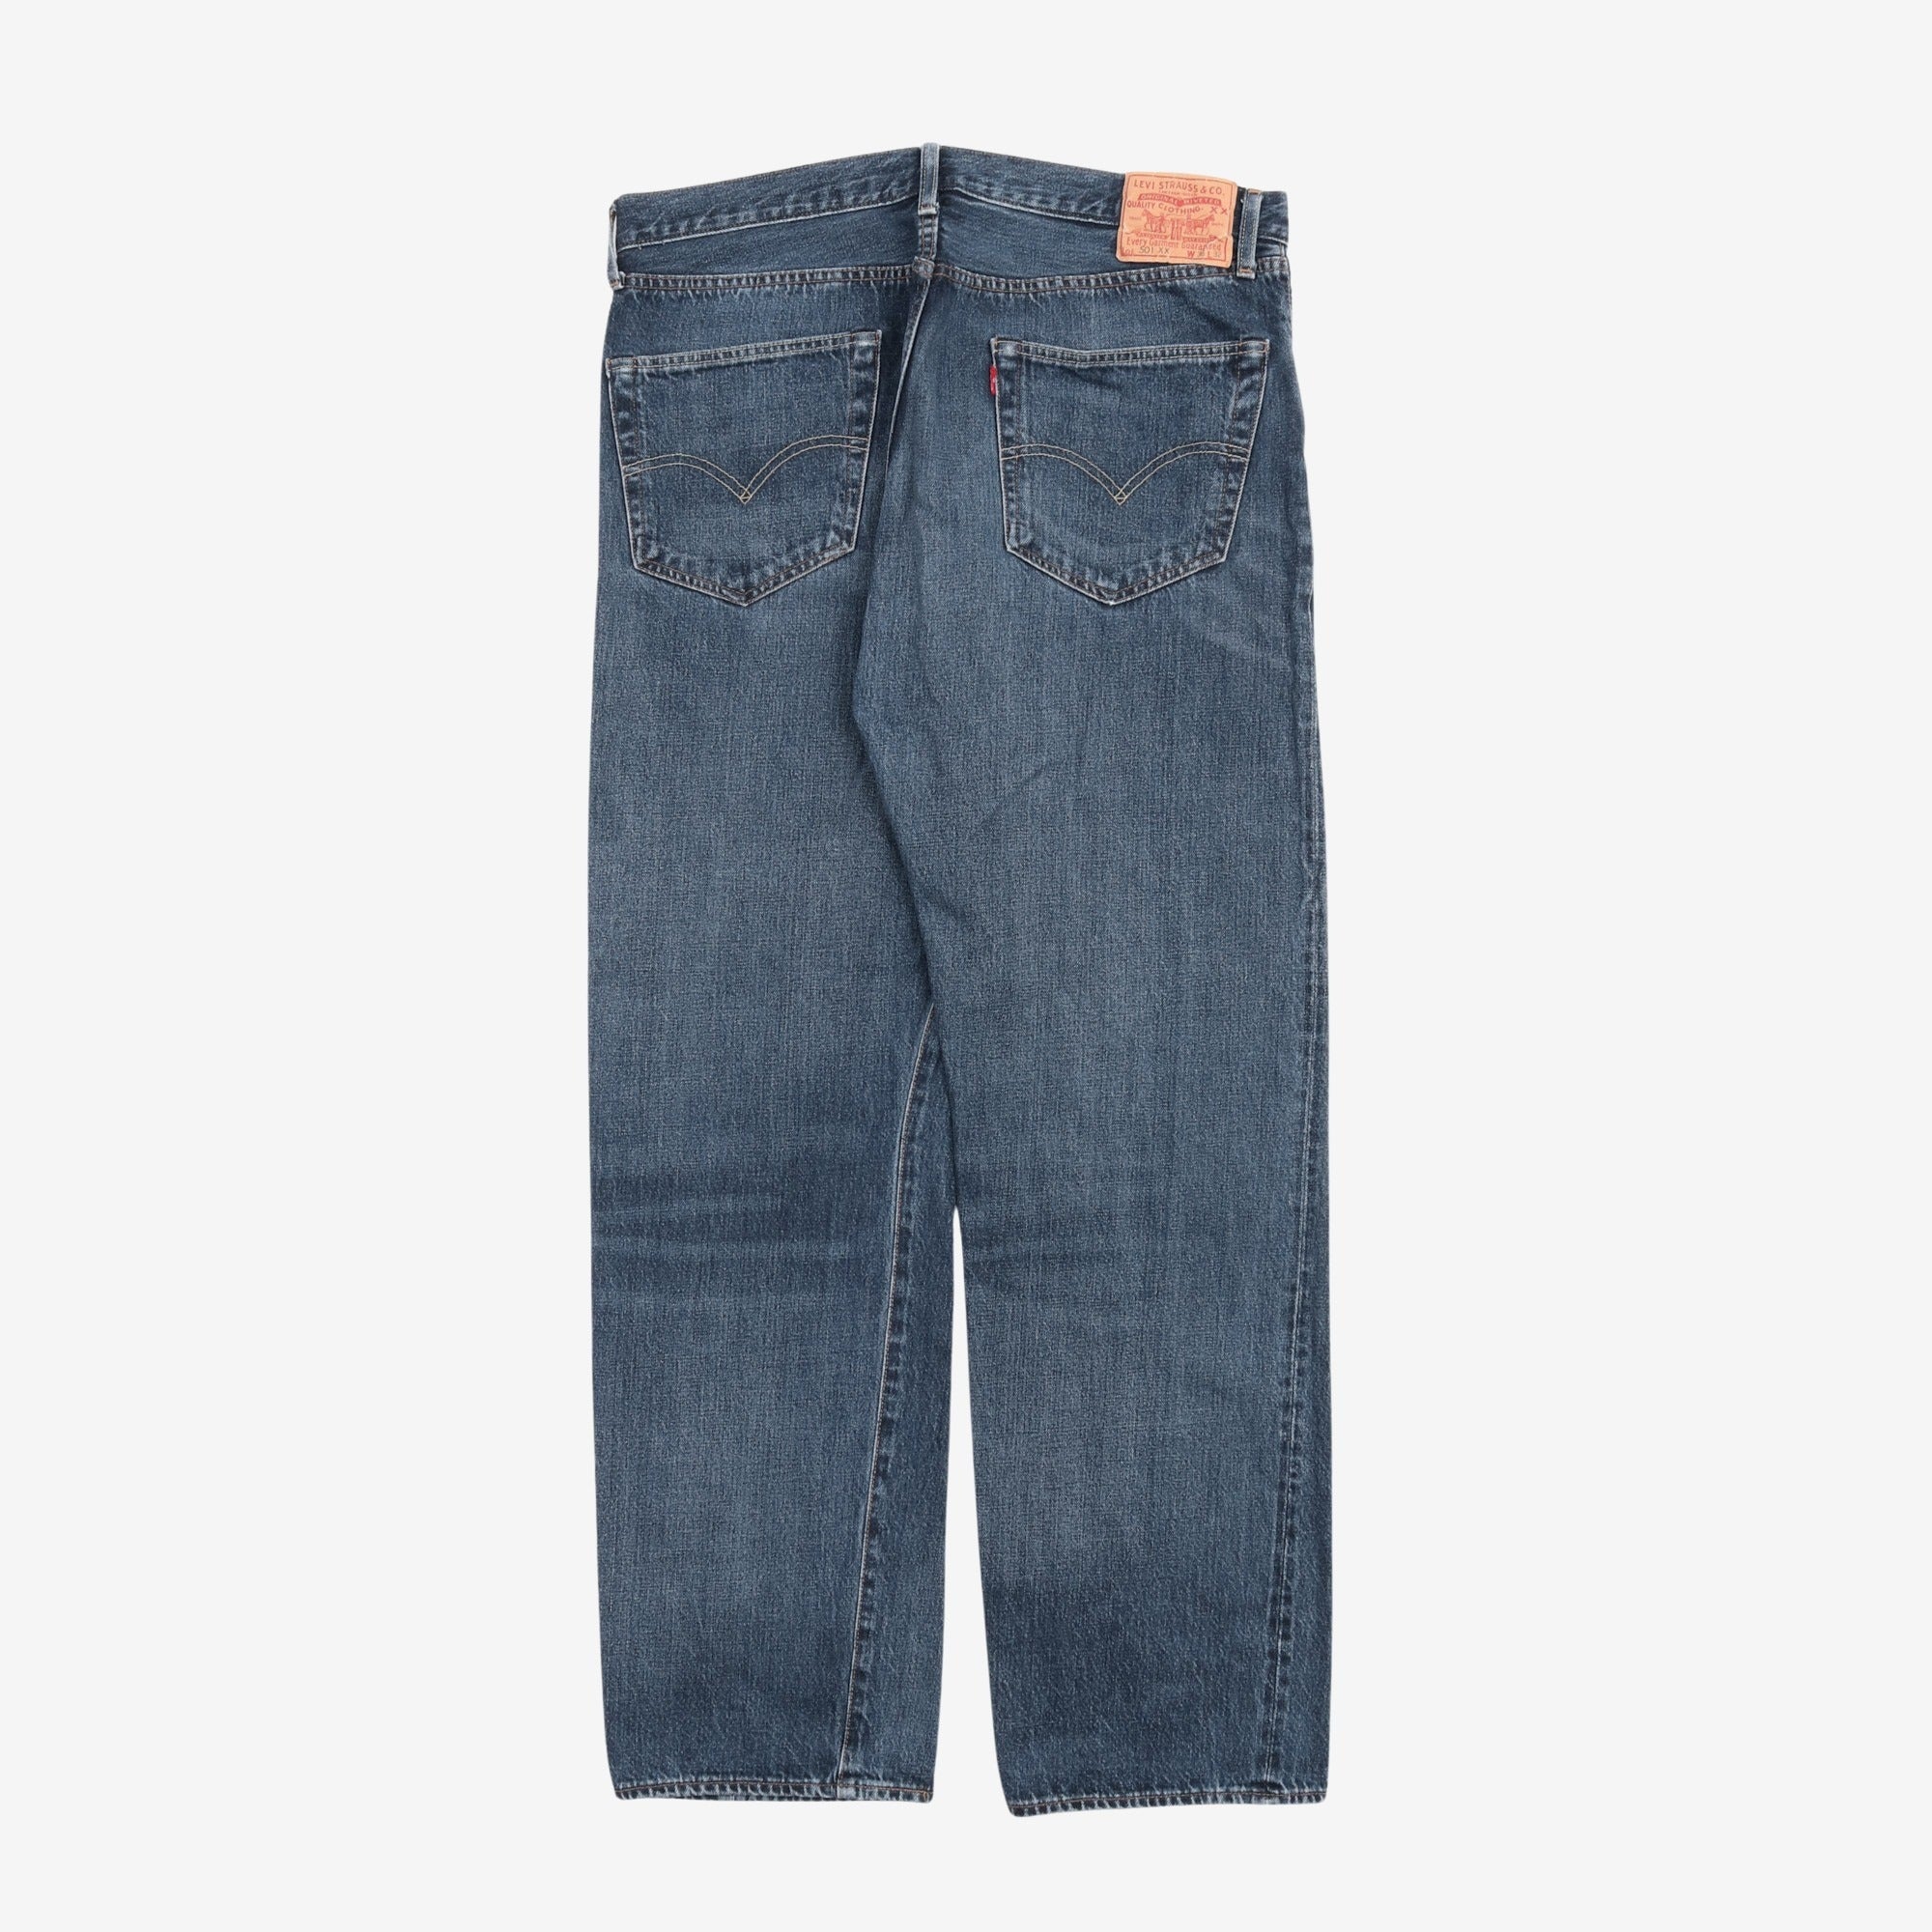 LVC 501 Jeans